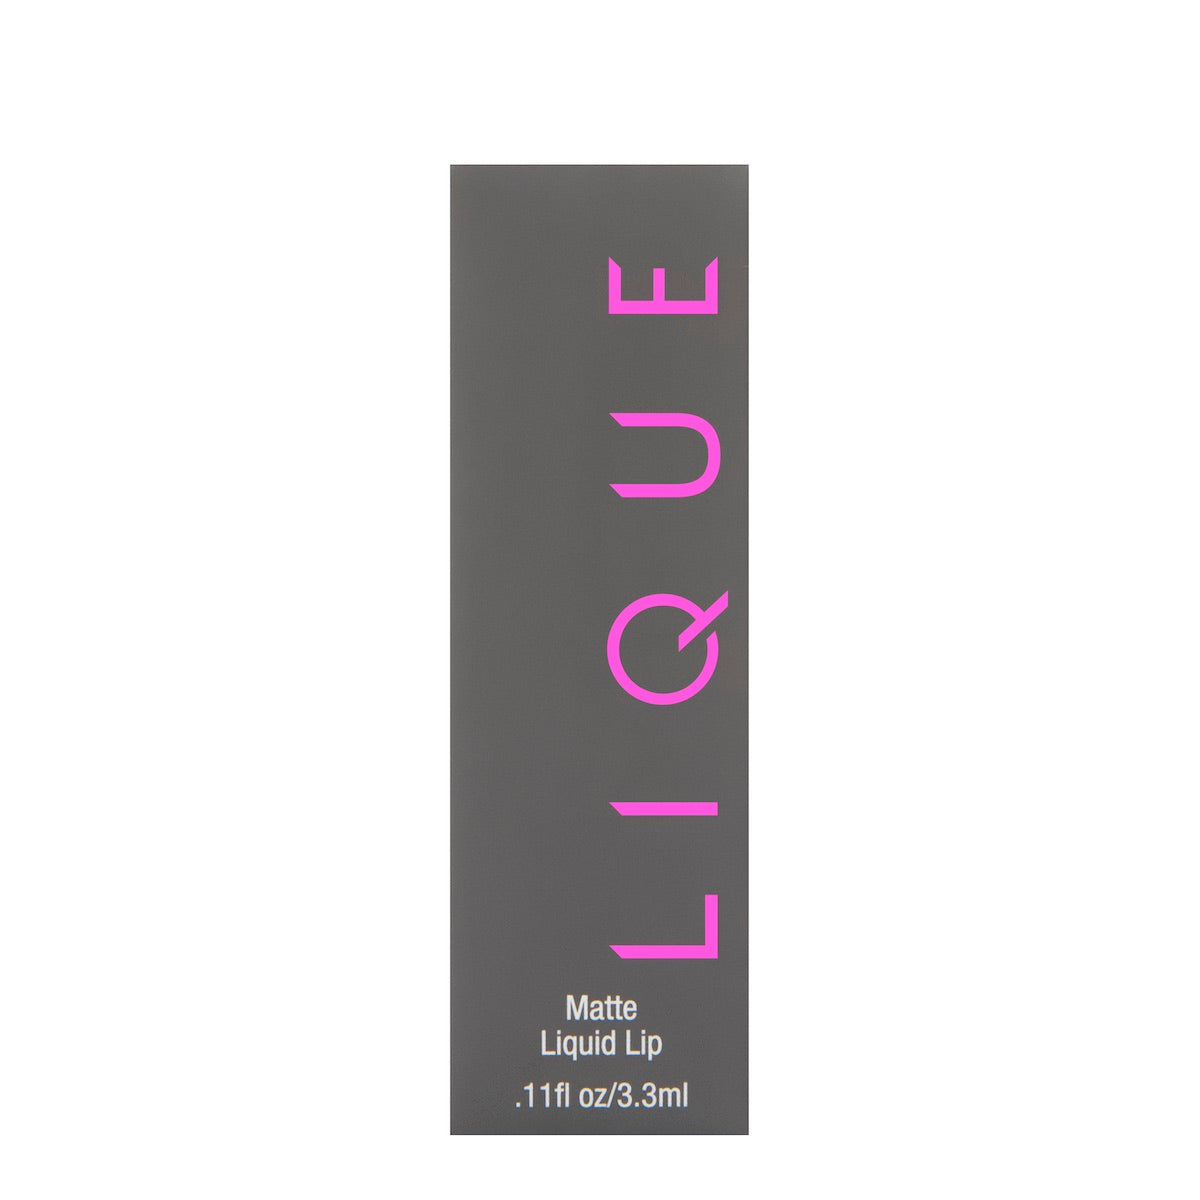 Lique Scandal Cream Lipstick Packaging